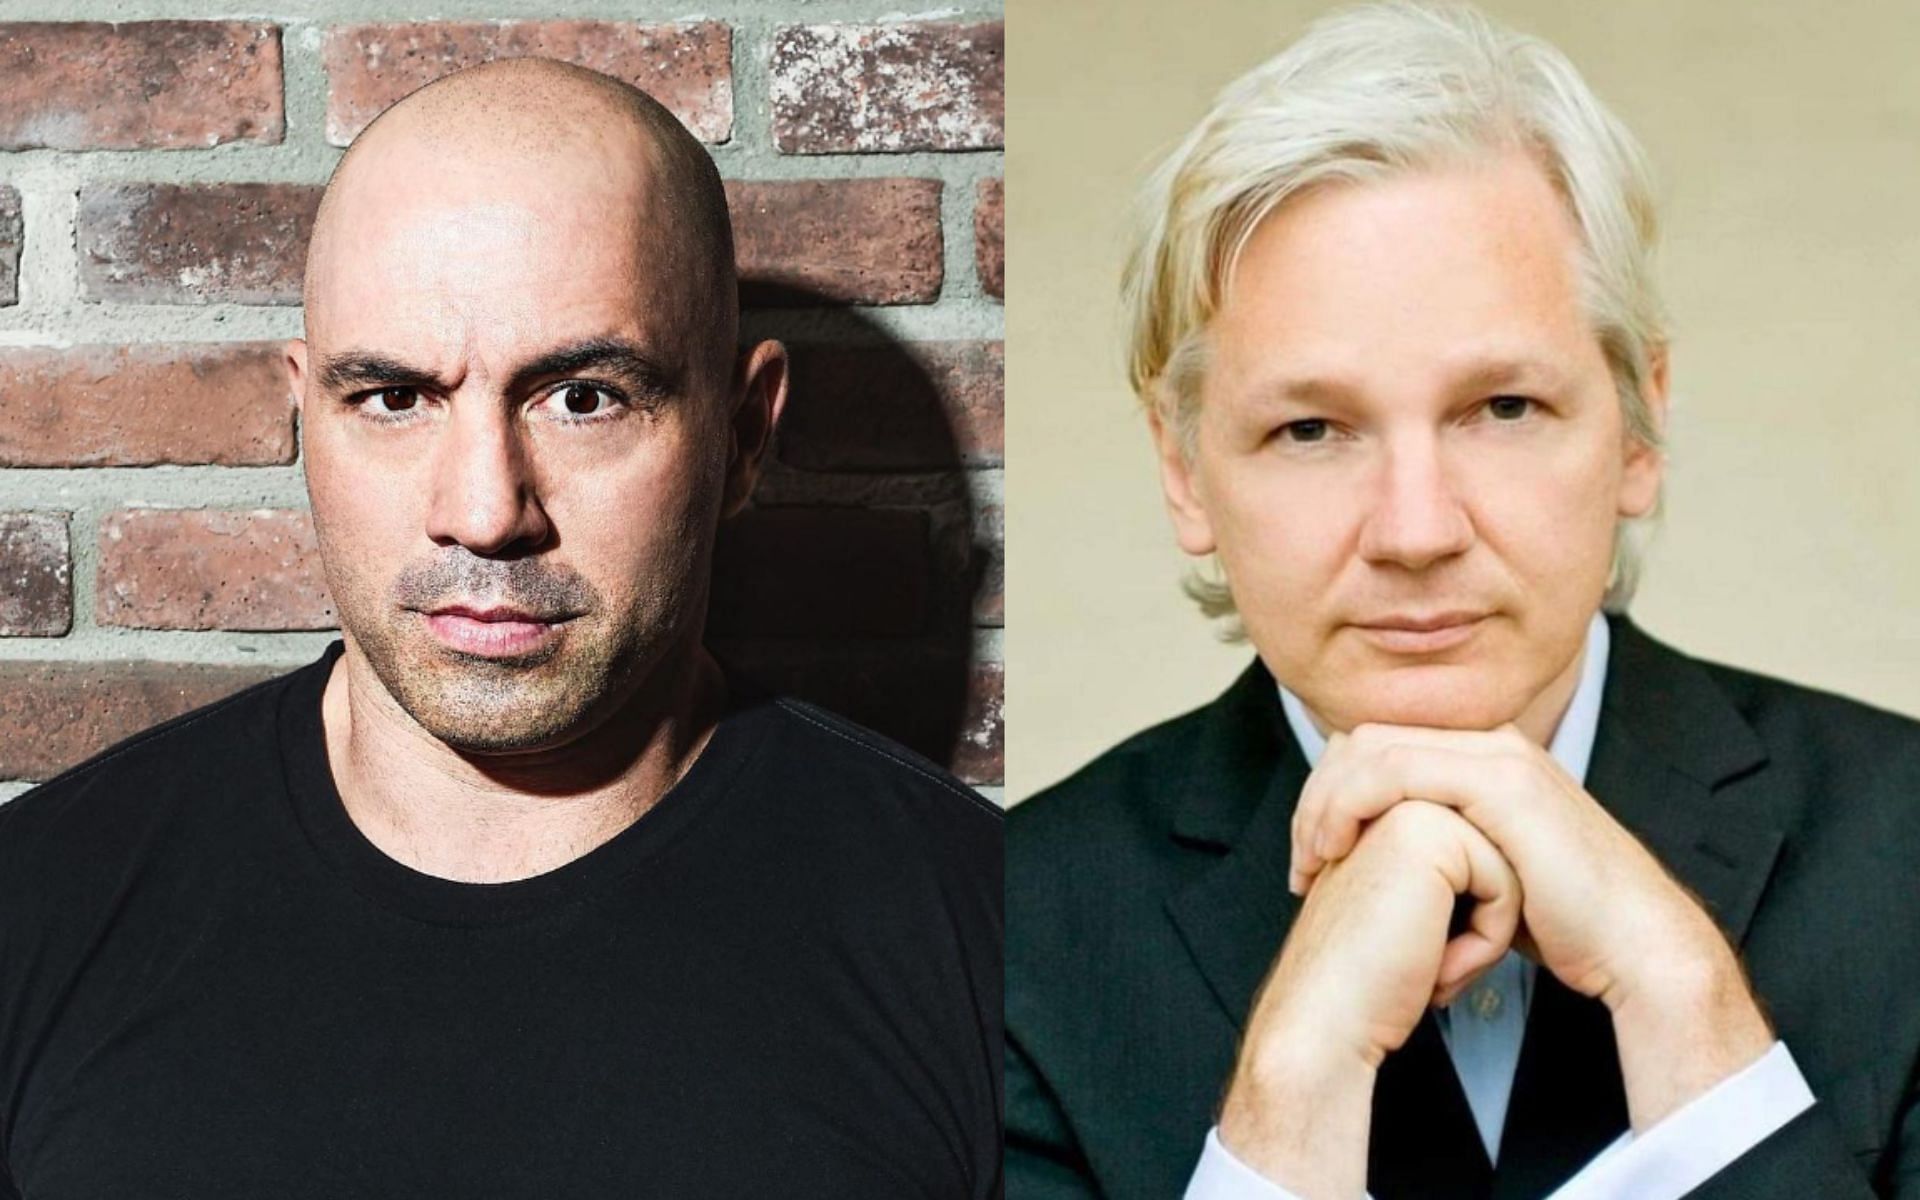 Joe Rogan (left) speaks on the trial of Julian Assange (right) [Images via: @joerogan and @support_julian_assange on Instagram]